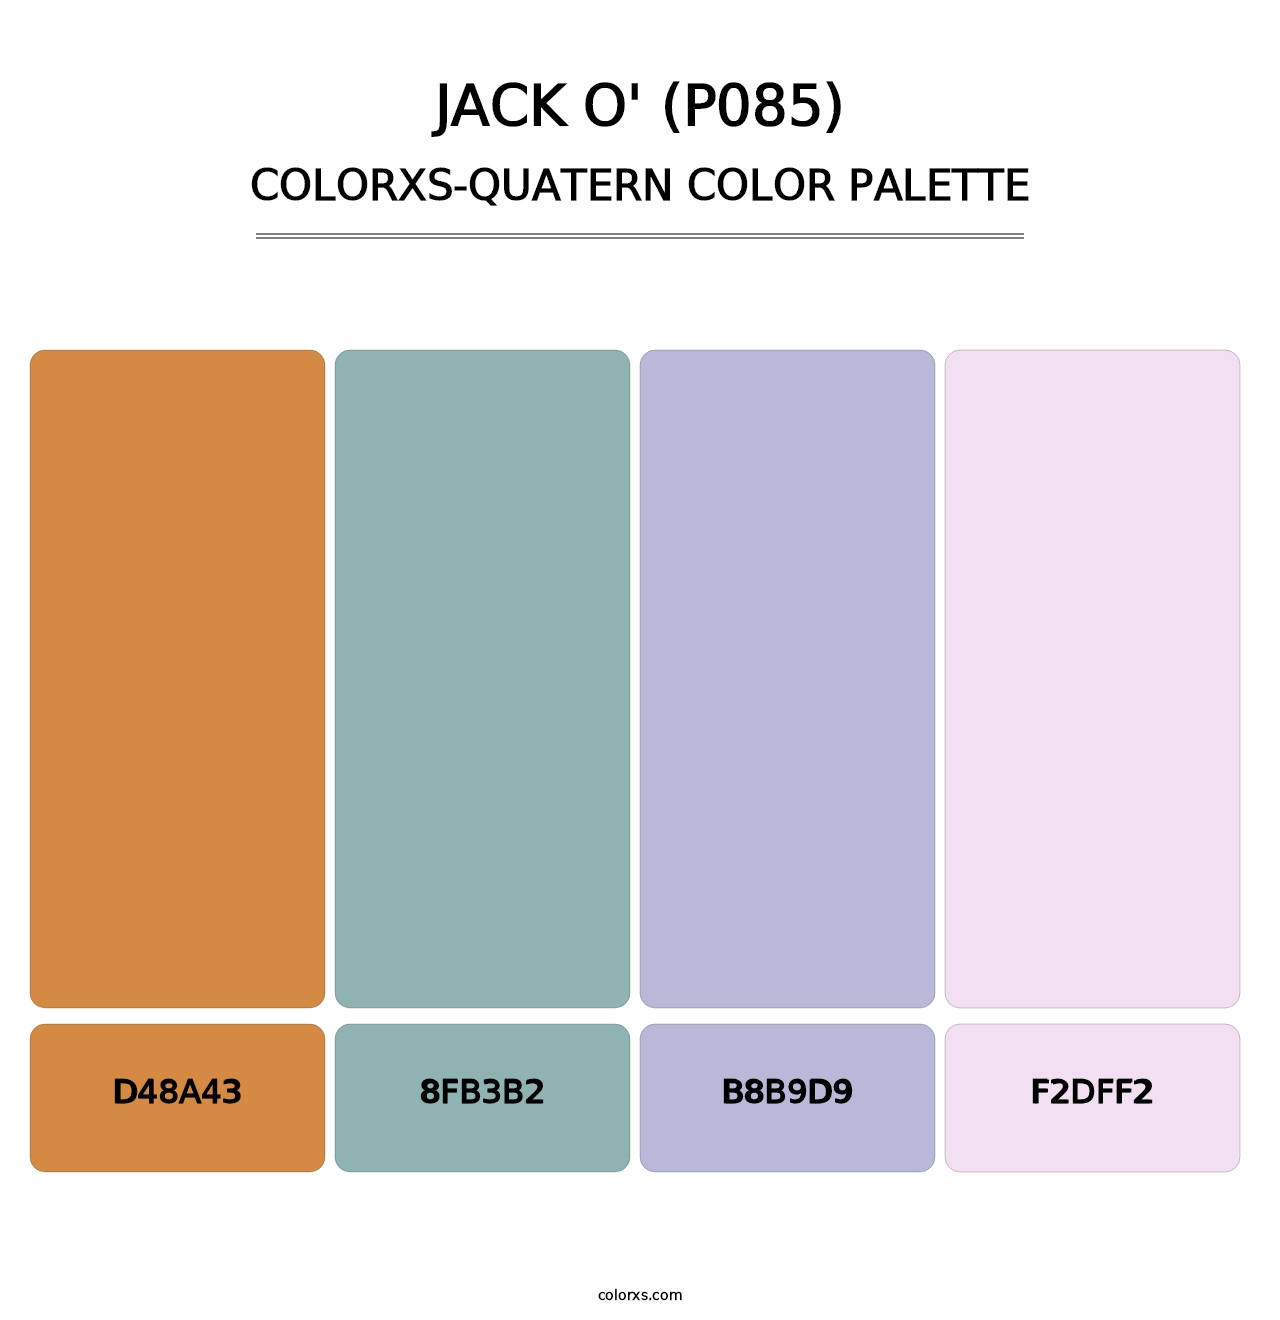 Jack O' (P085) - Colorxs Quatern Palette